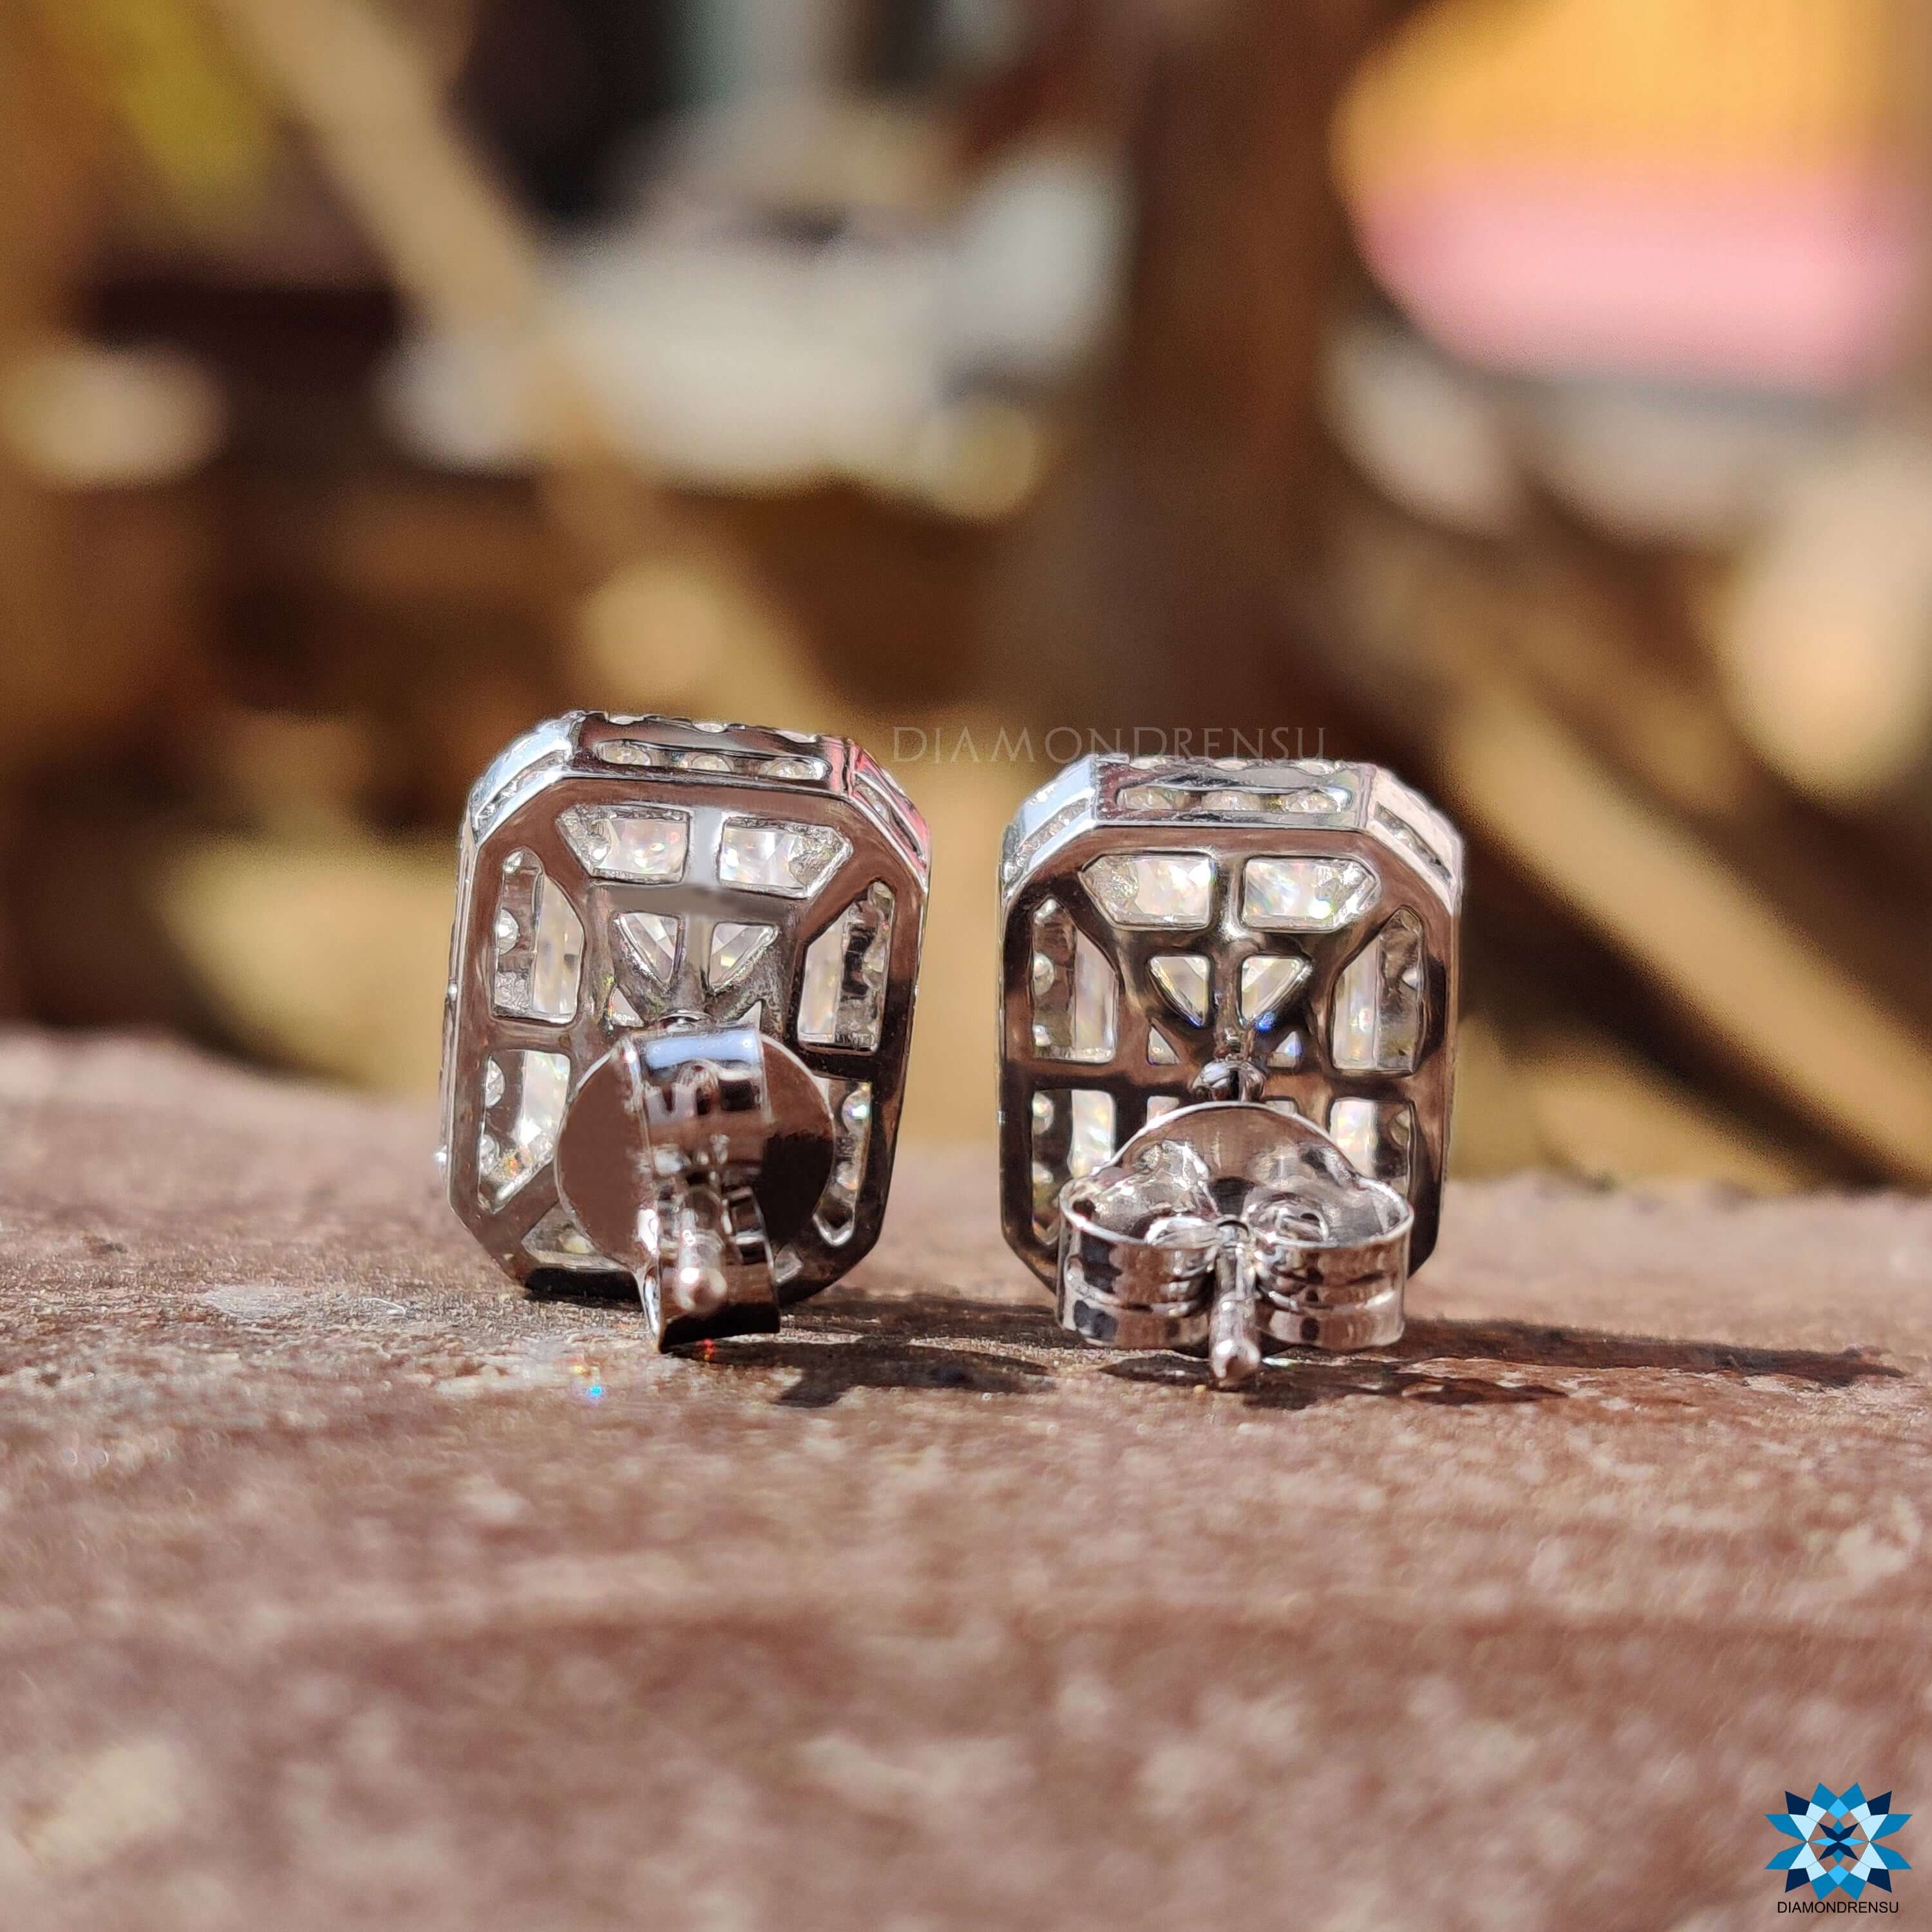 white gold wedding earrings - diamondrensu